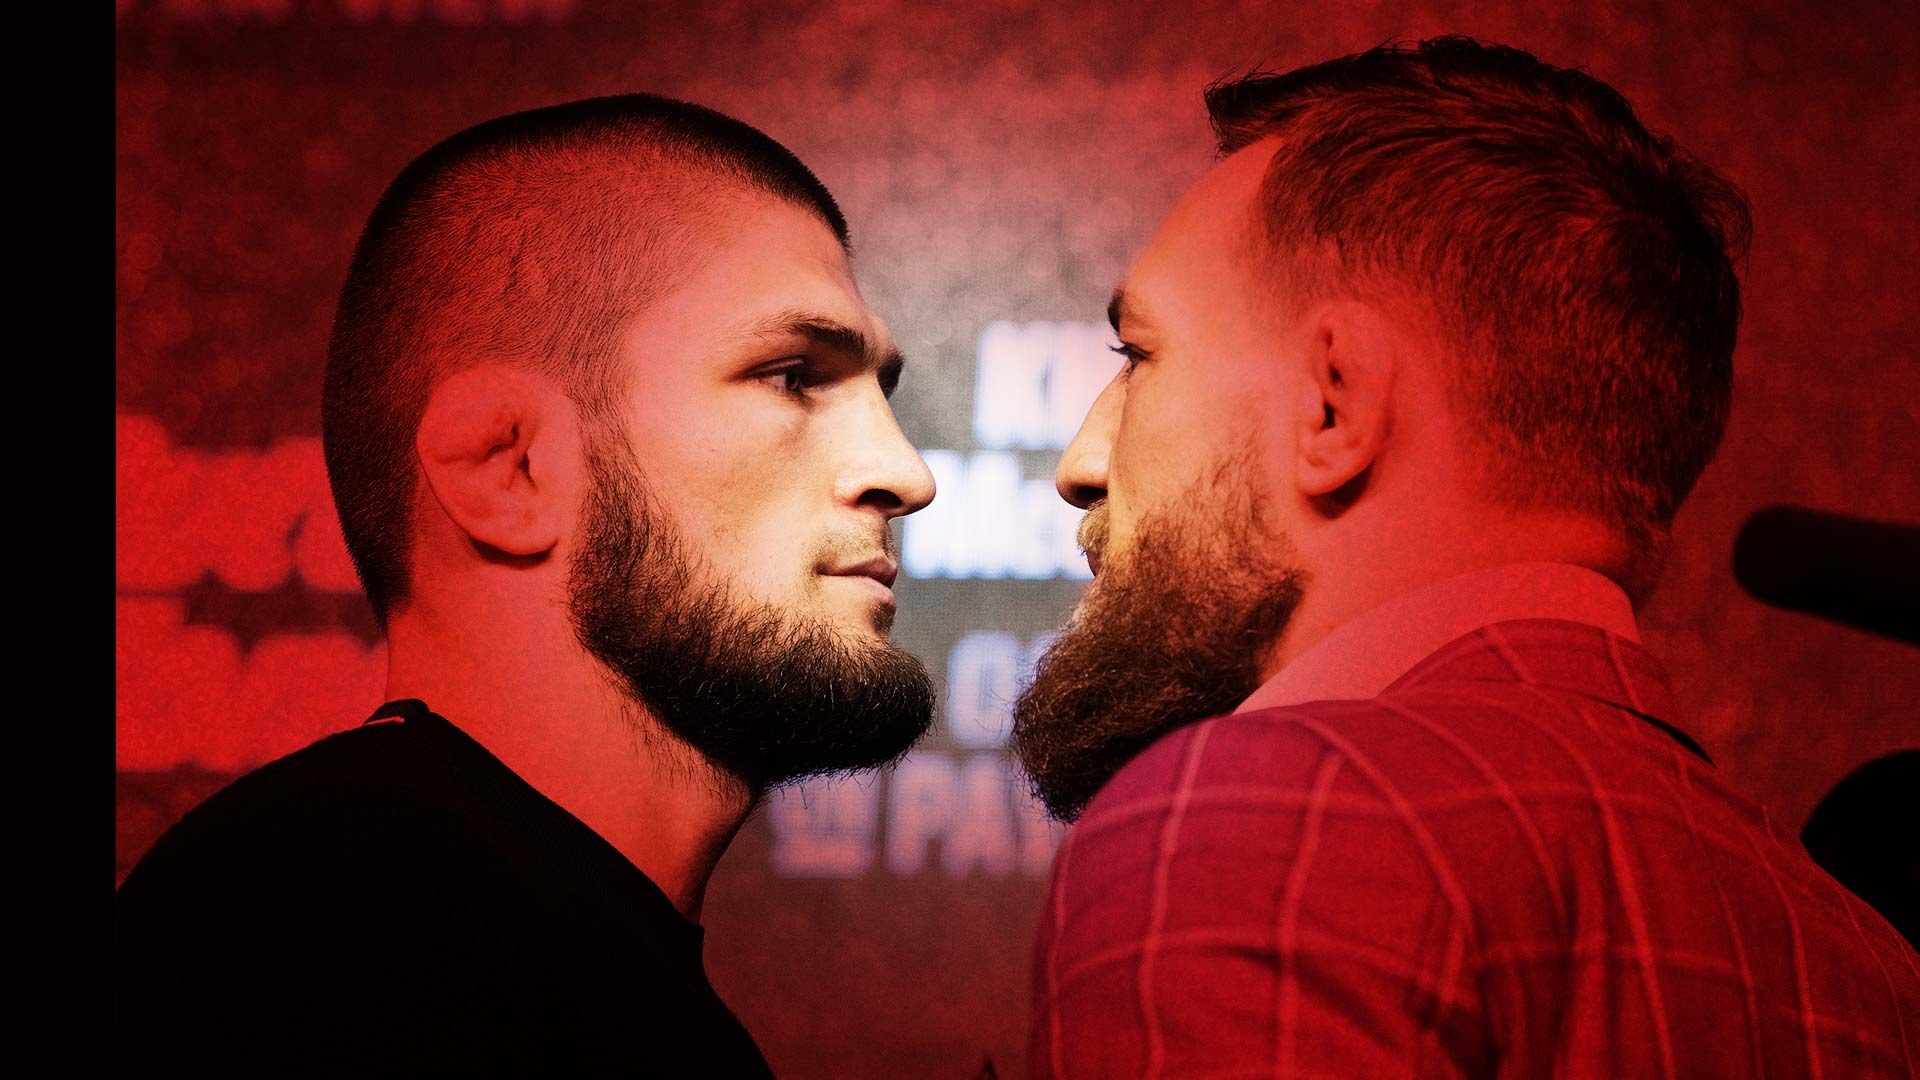 McGregor vs Khabib UFC 2019